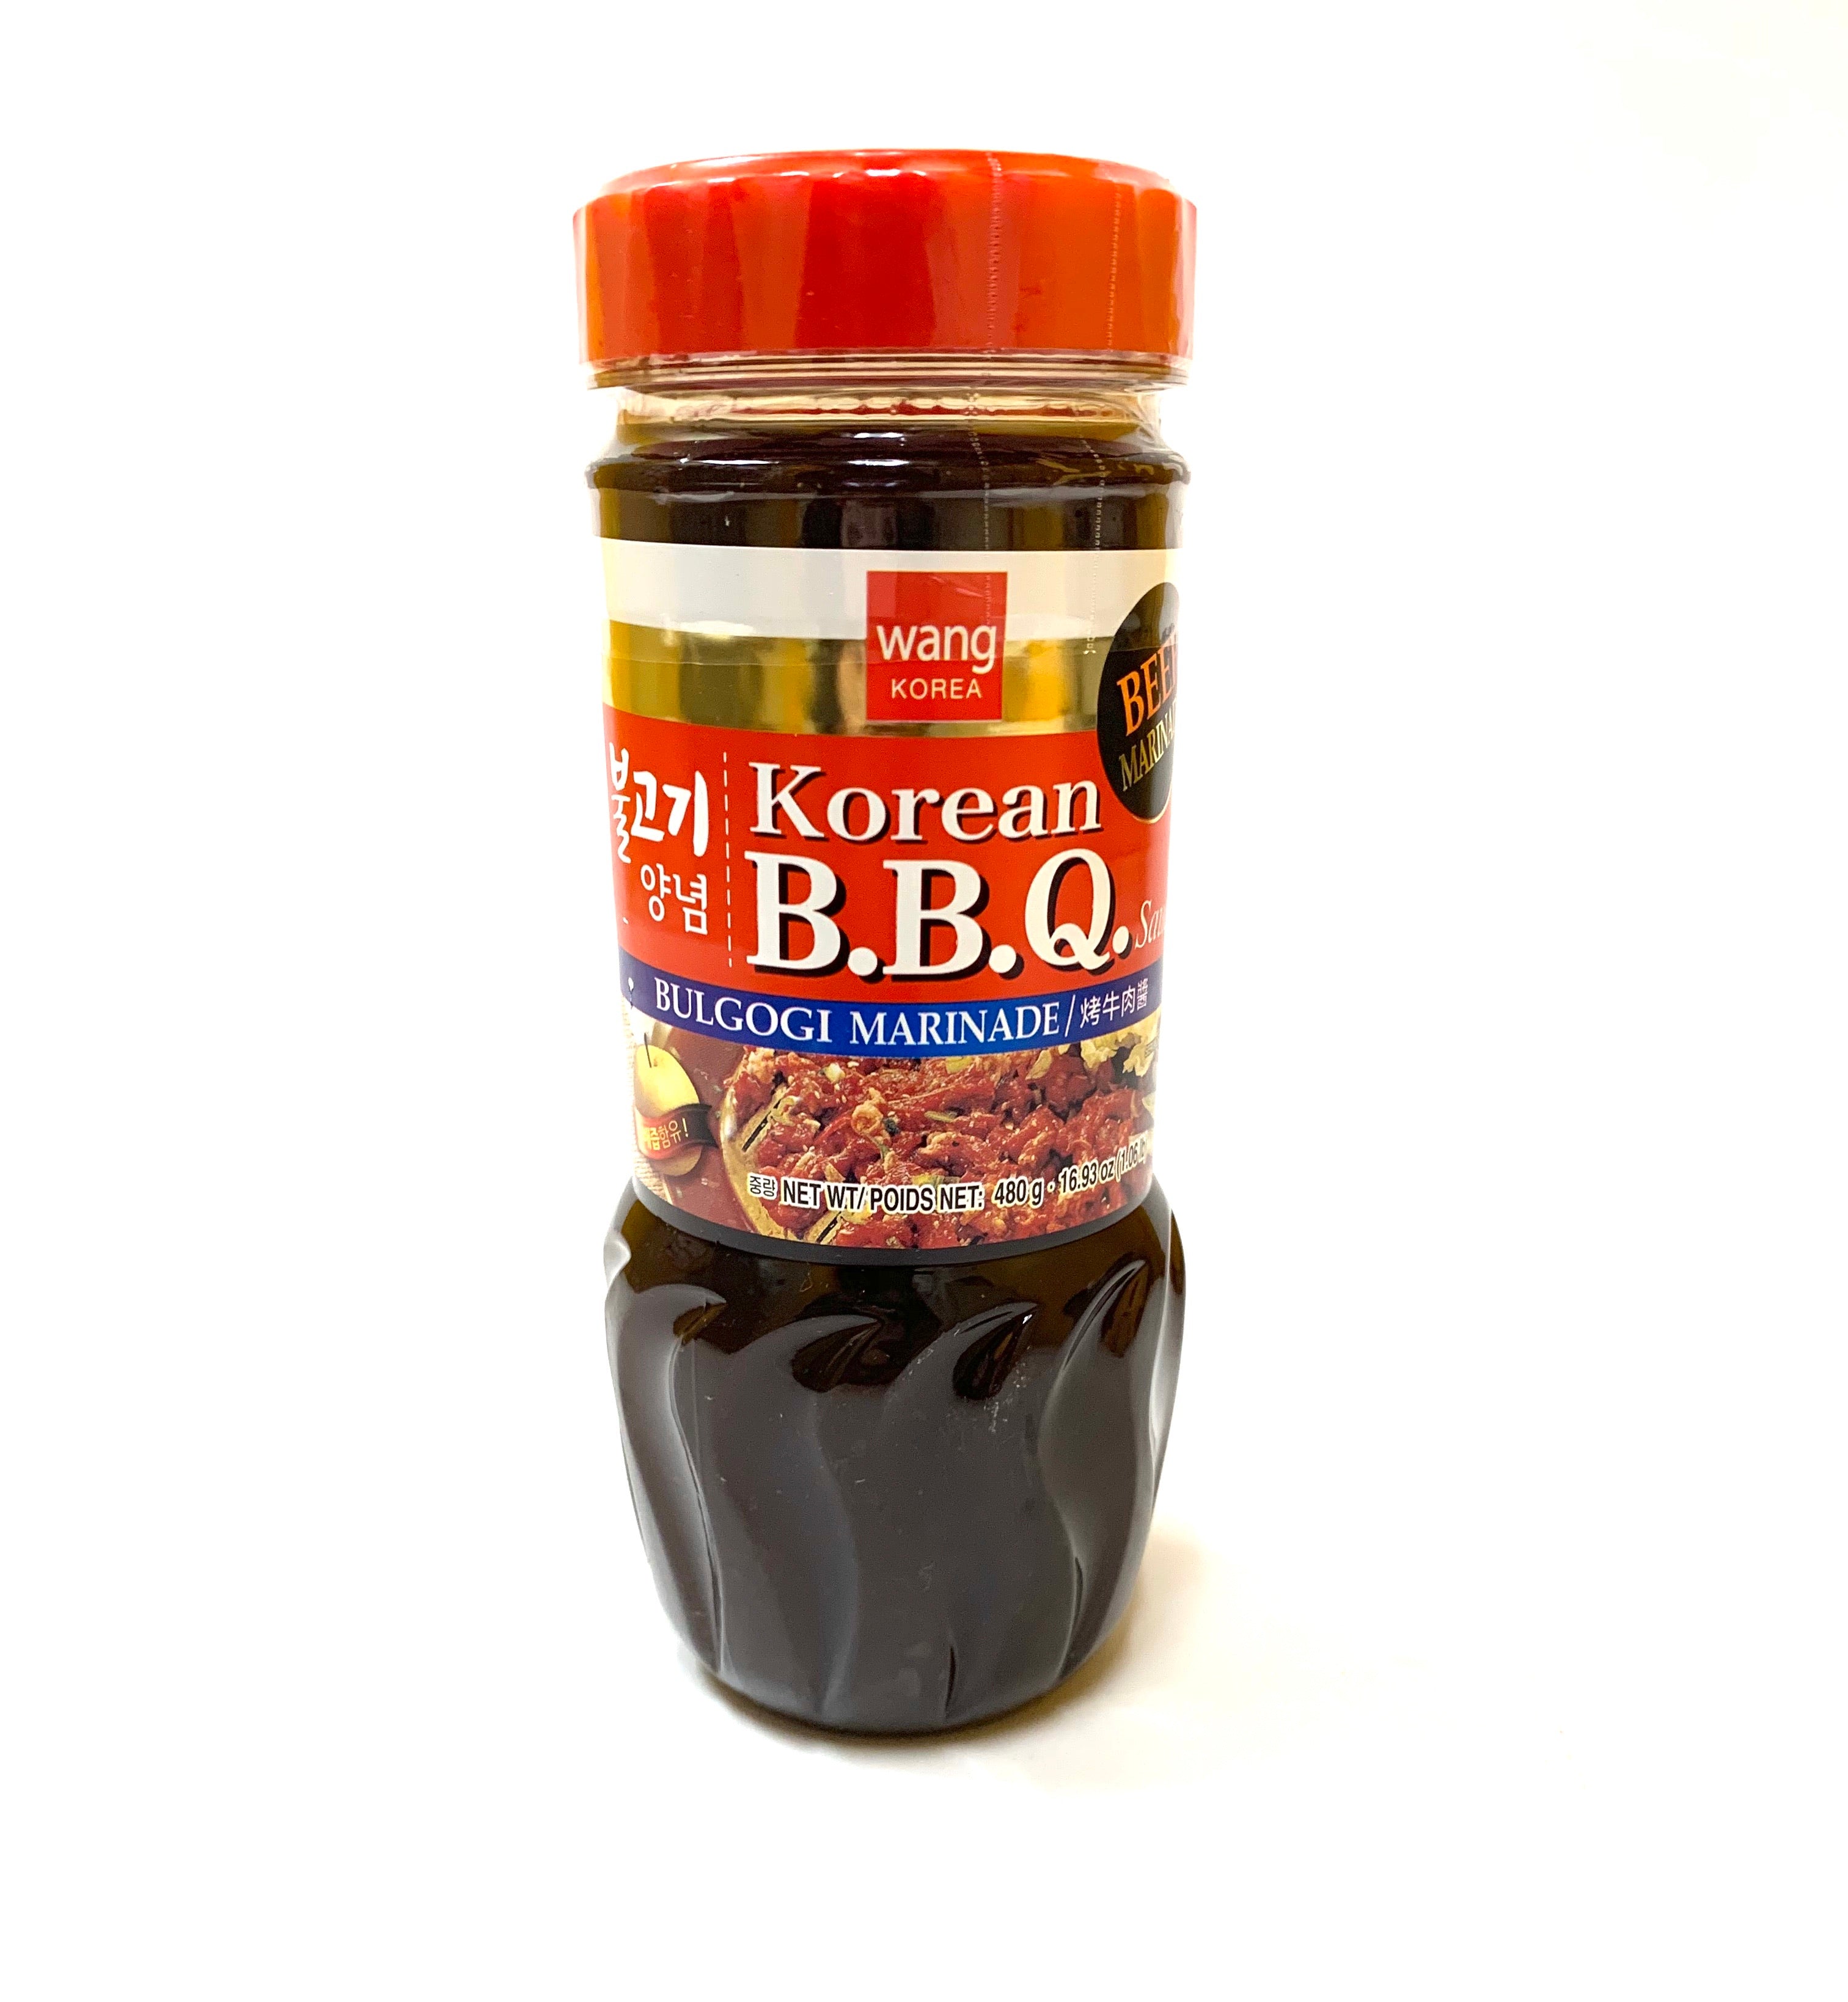 Wang Korean BBQ Sauce Bulgogi (carne de res) Marinada - 480g/16.93oz -1